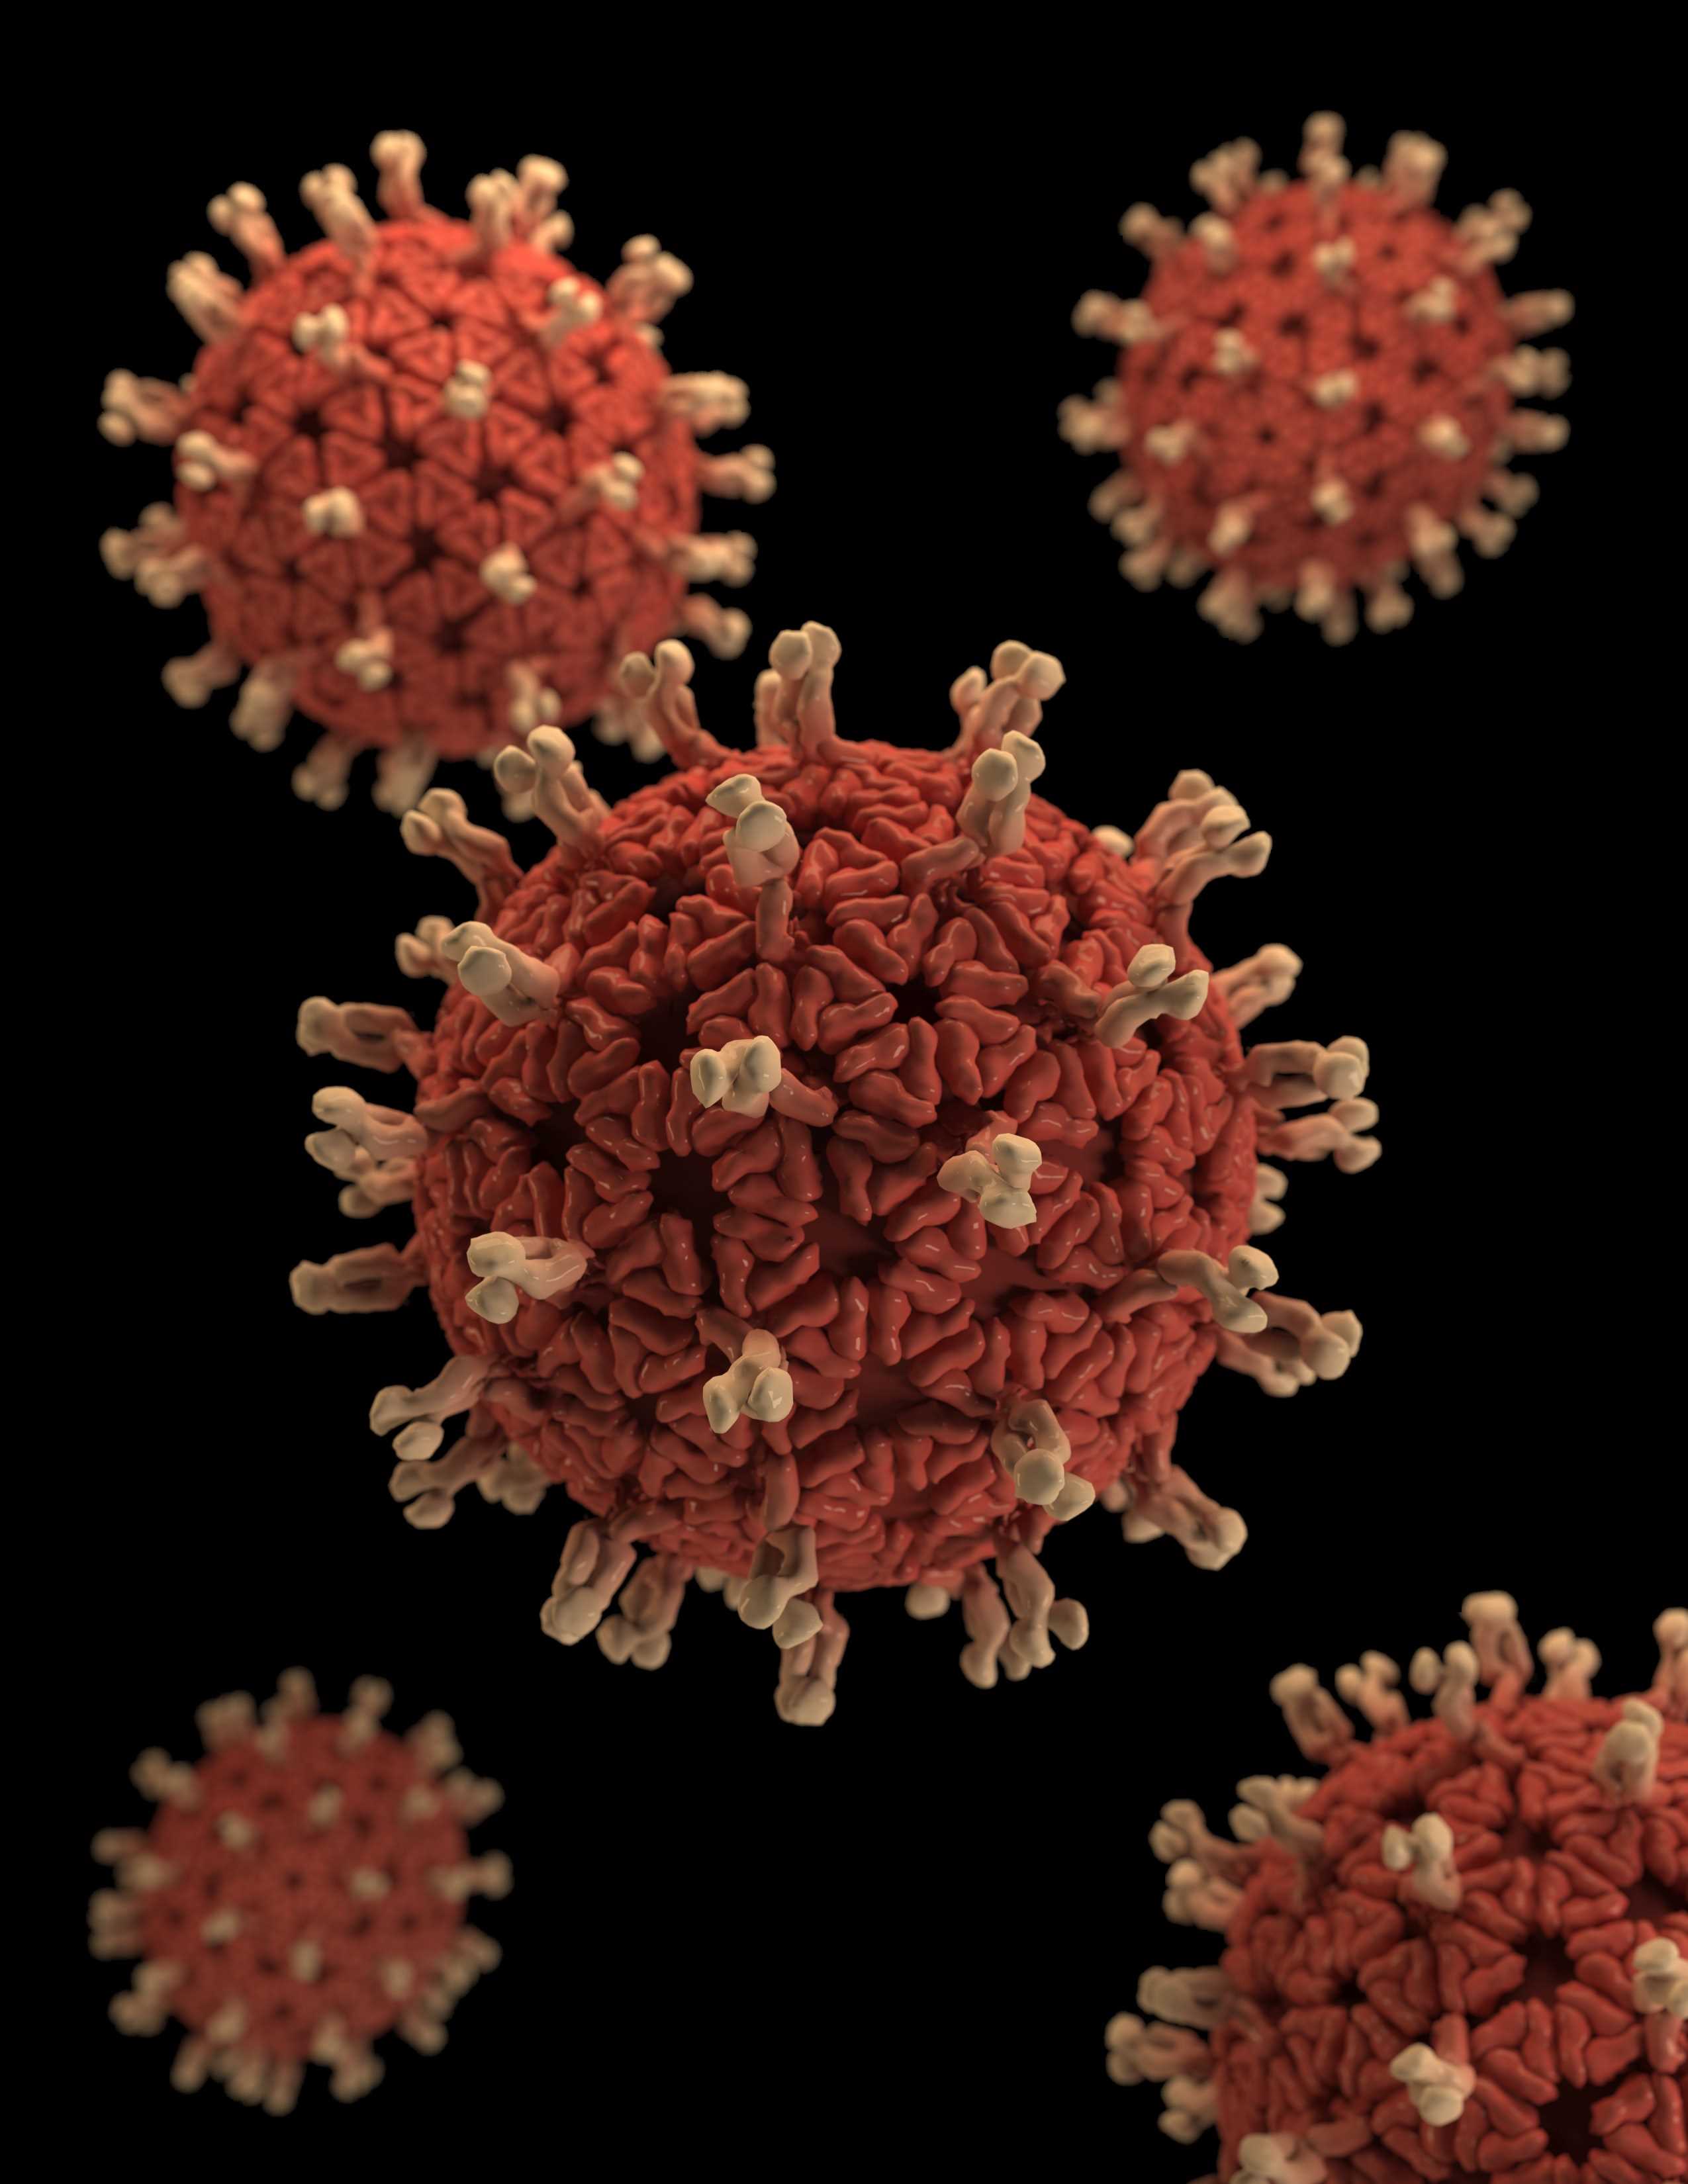 El Coronavirus SARS-CoV-2